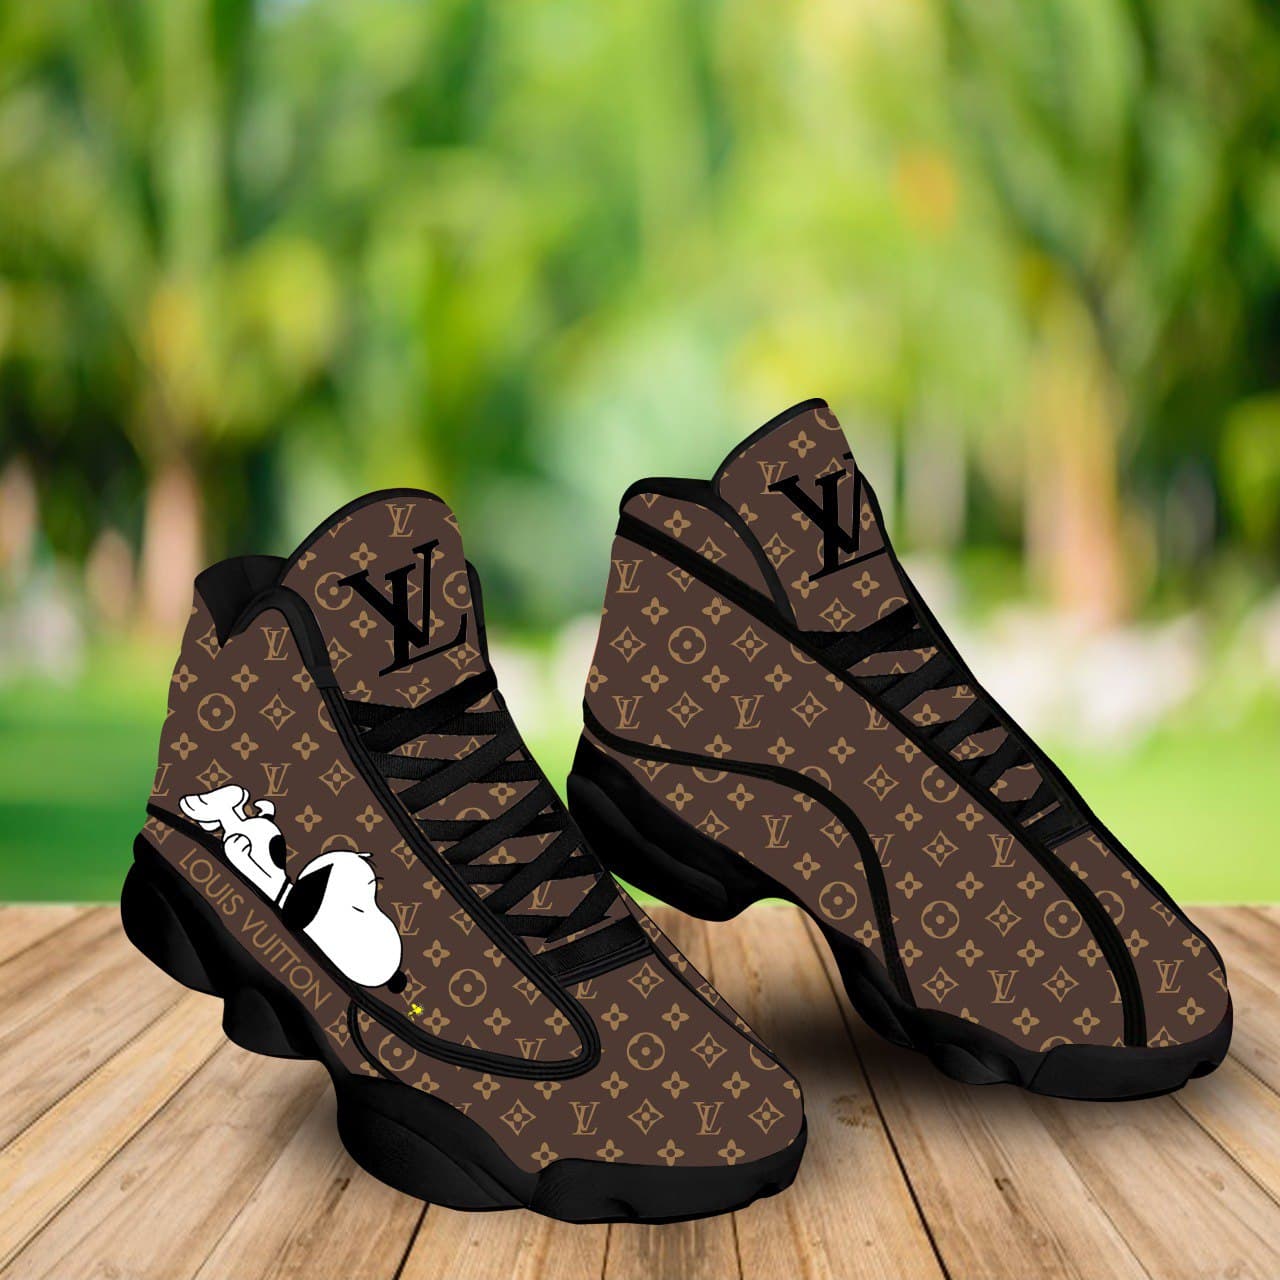 Louis Vuitton Snoopy Air Jordan 13 Shoes Fashion Luxury Trending Sneakers